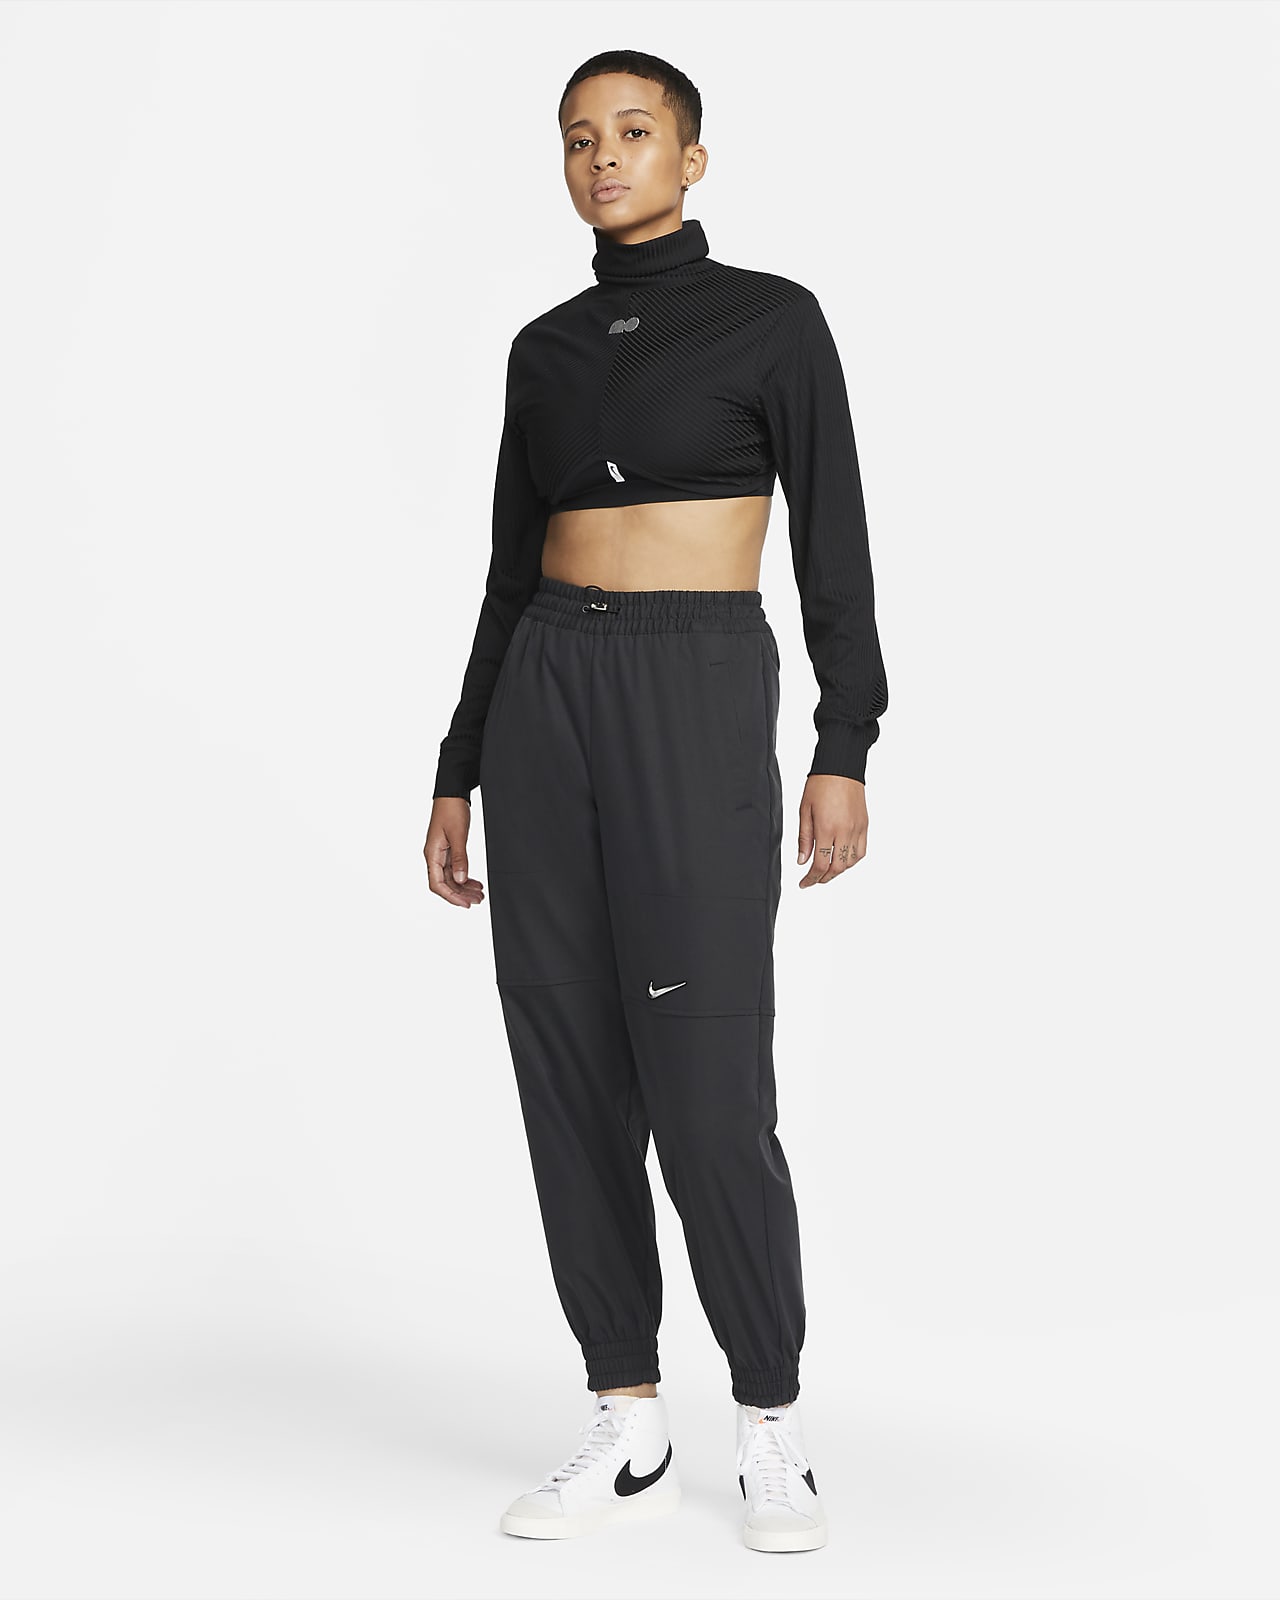 Naomi Osaka Women's Long-Sleeve Mock-Neck Top. Nike ZA